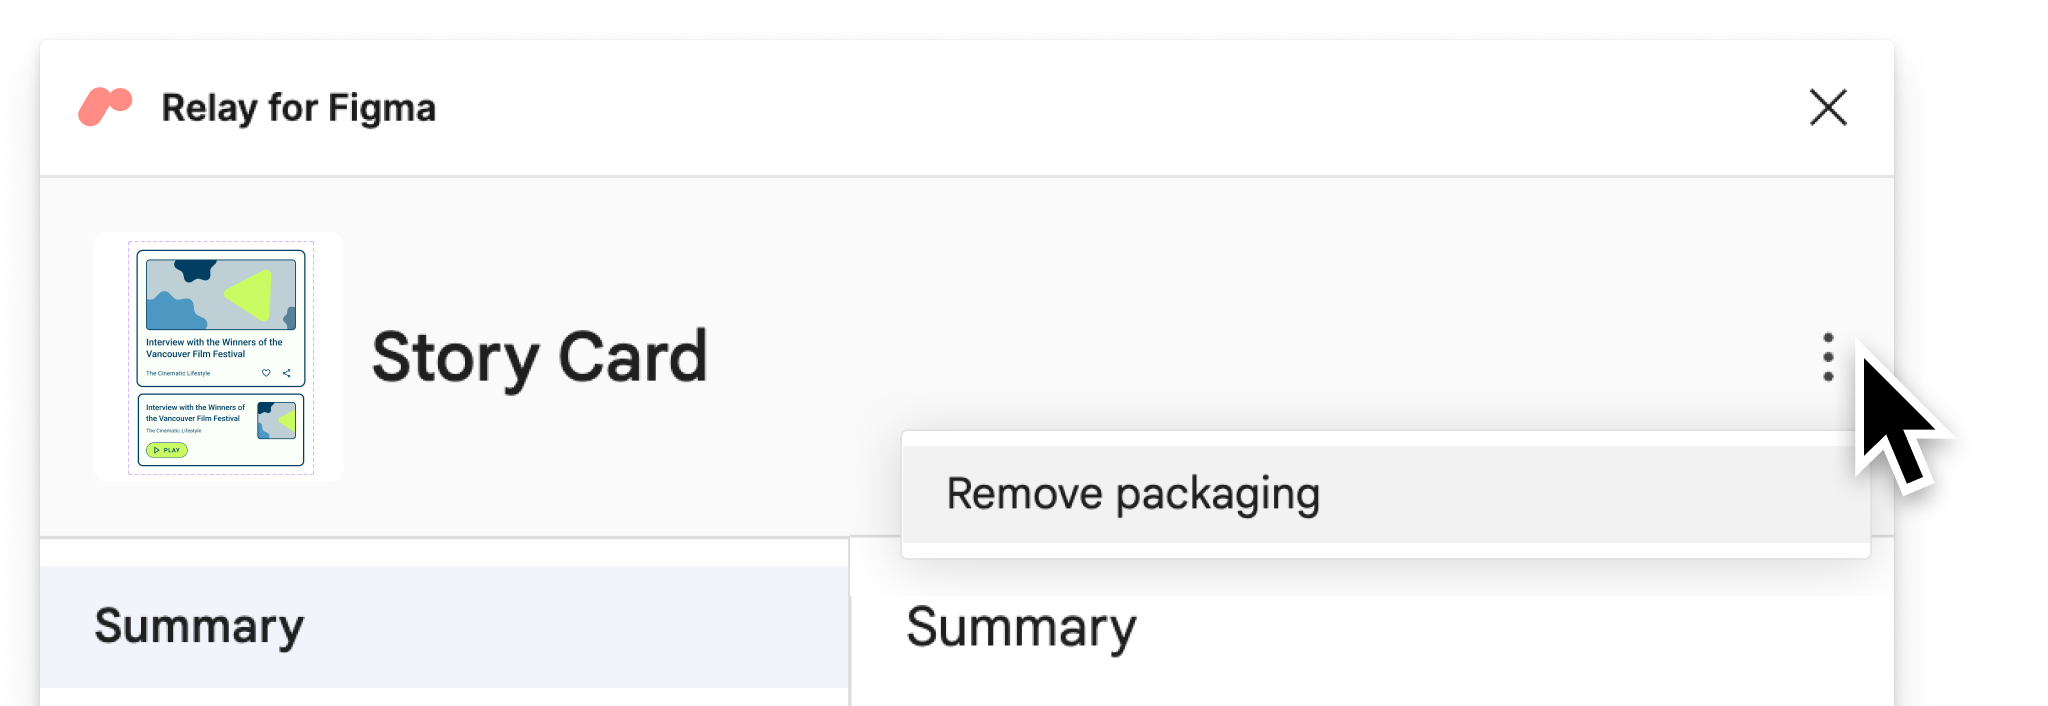 外掛程式中的「Remove packaging」選項